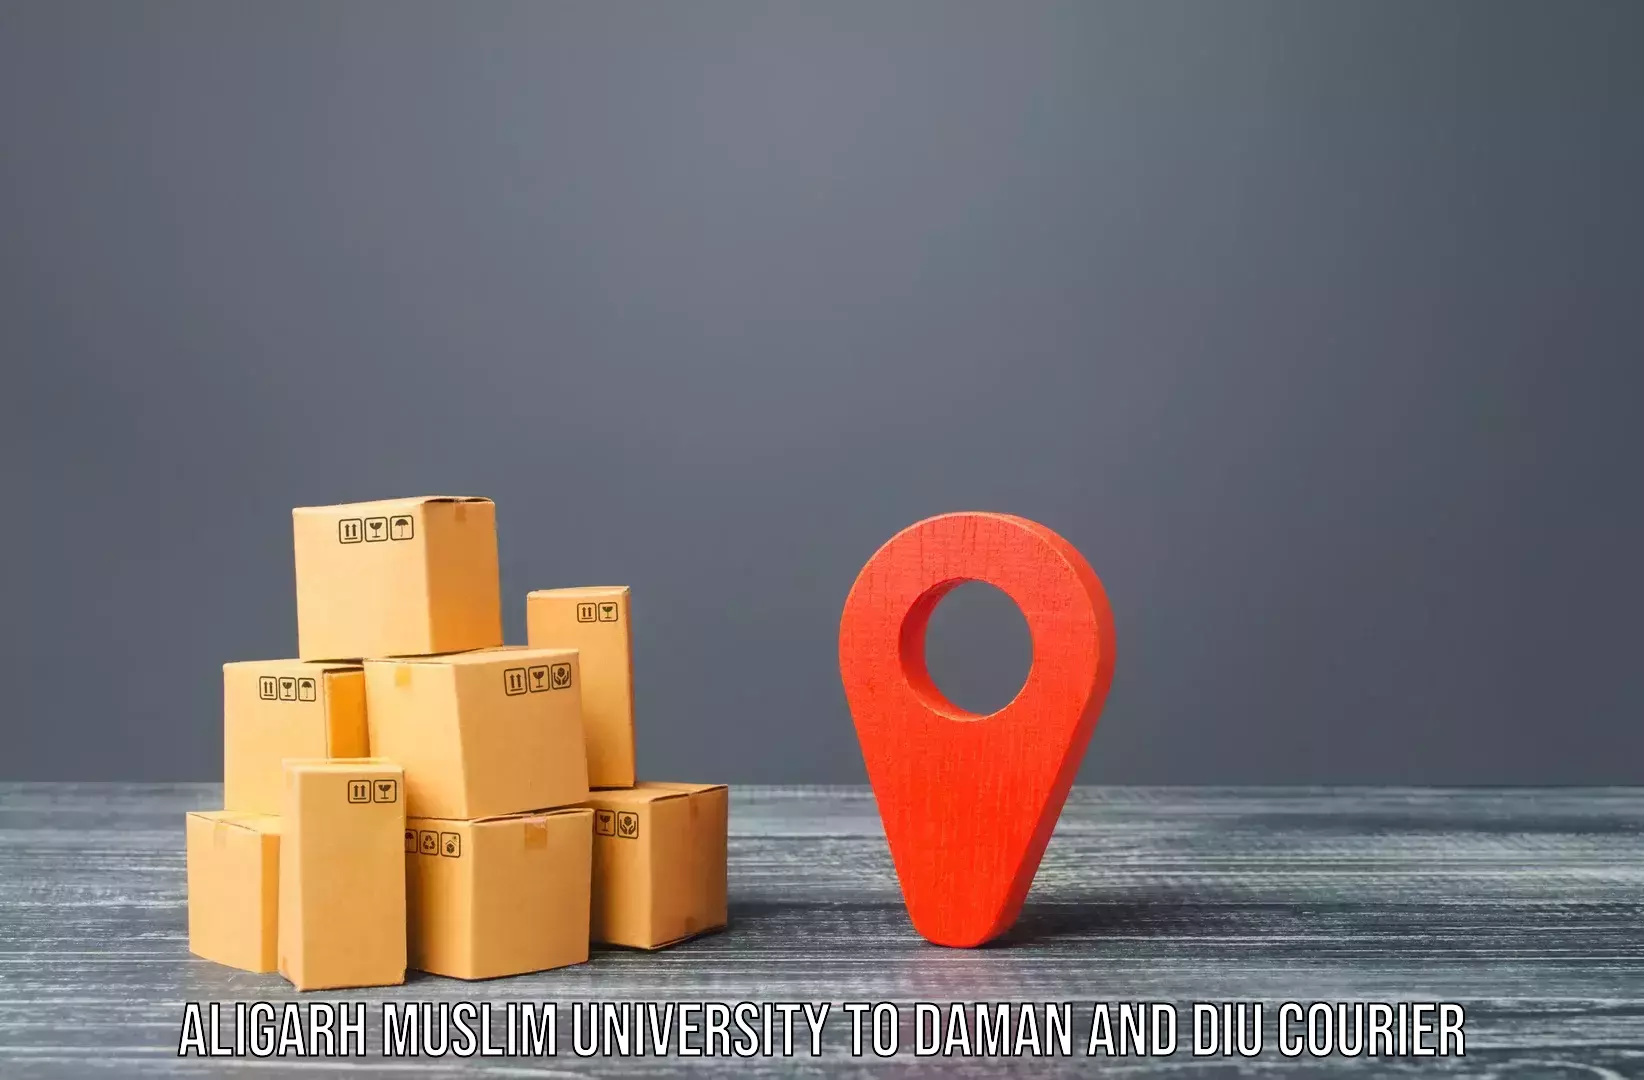 Quality moving company Aligarh Muslim University to Daman and Diu